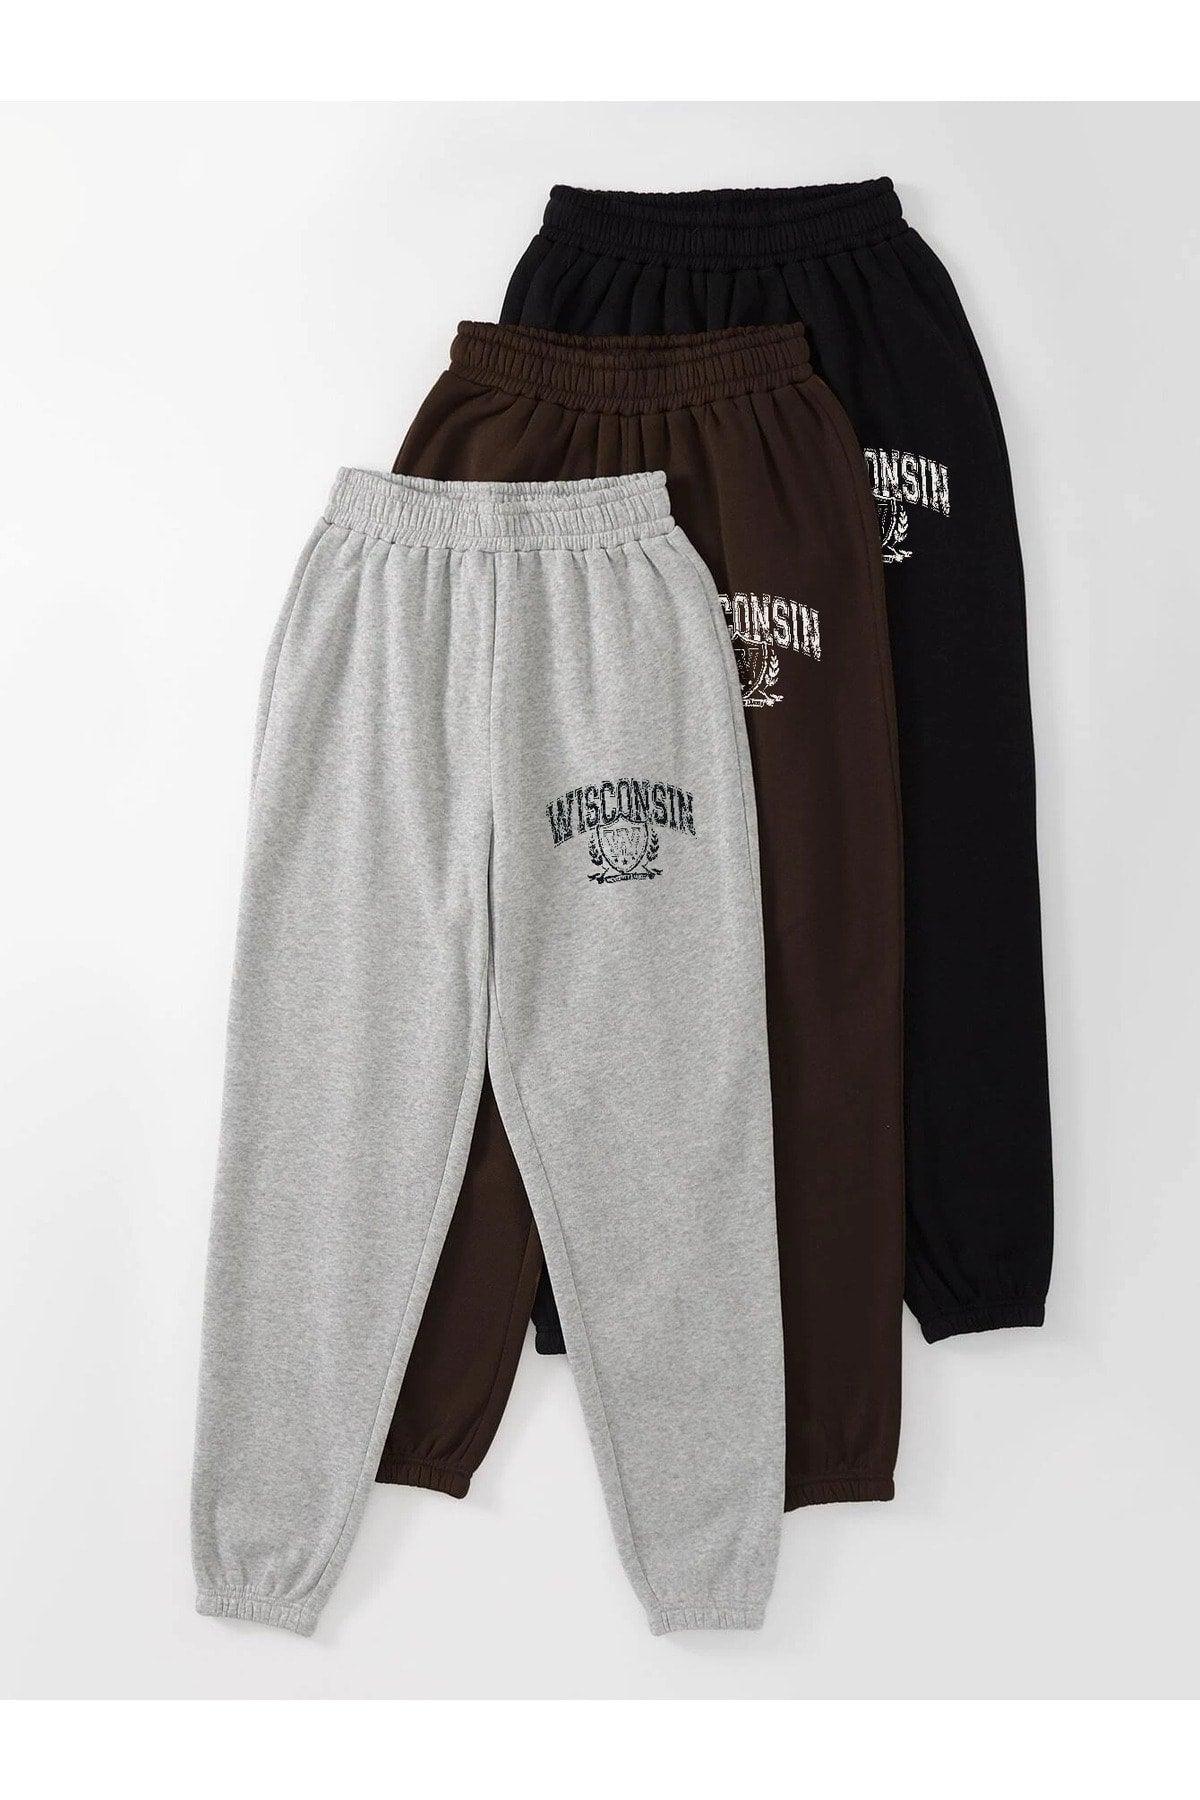 3-pack Wisconsin Printed Jogger Sweatpants - Black Gray And Brown Elastic Leg High Waist Summer - Swordslife